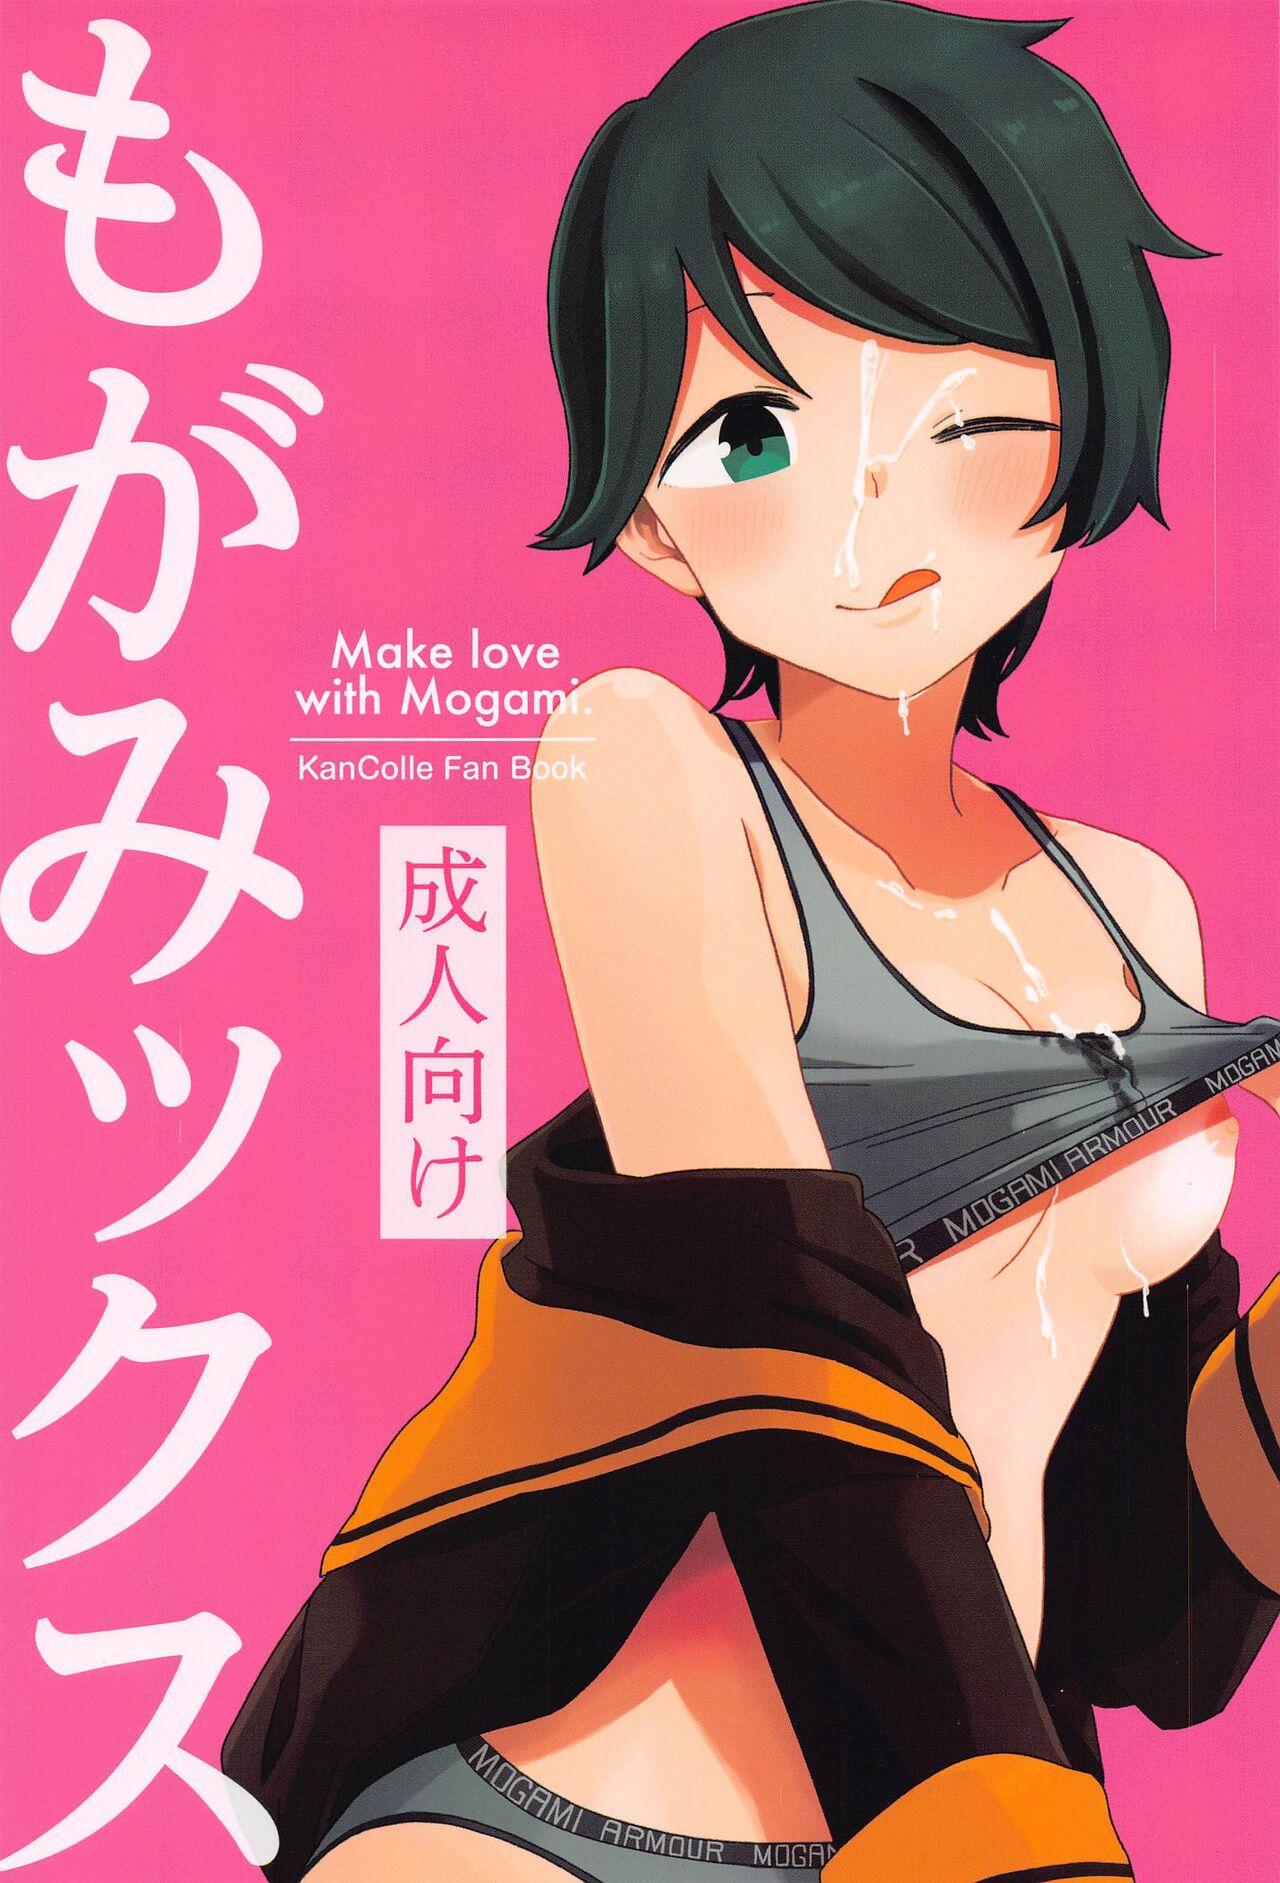 Mogamix - Make love with Mogami. 0